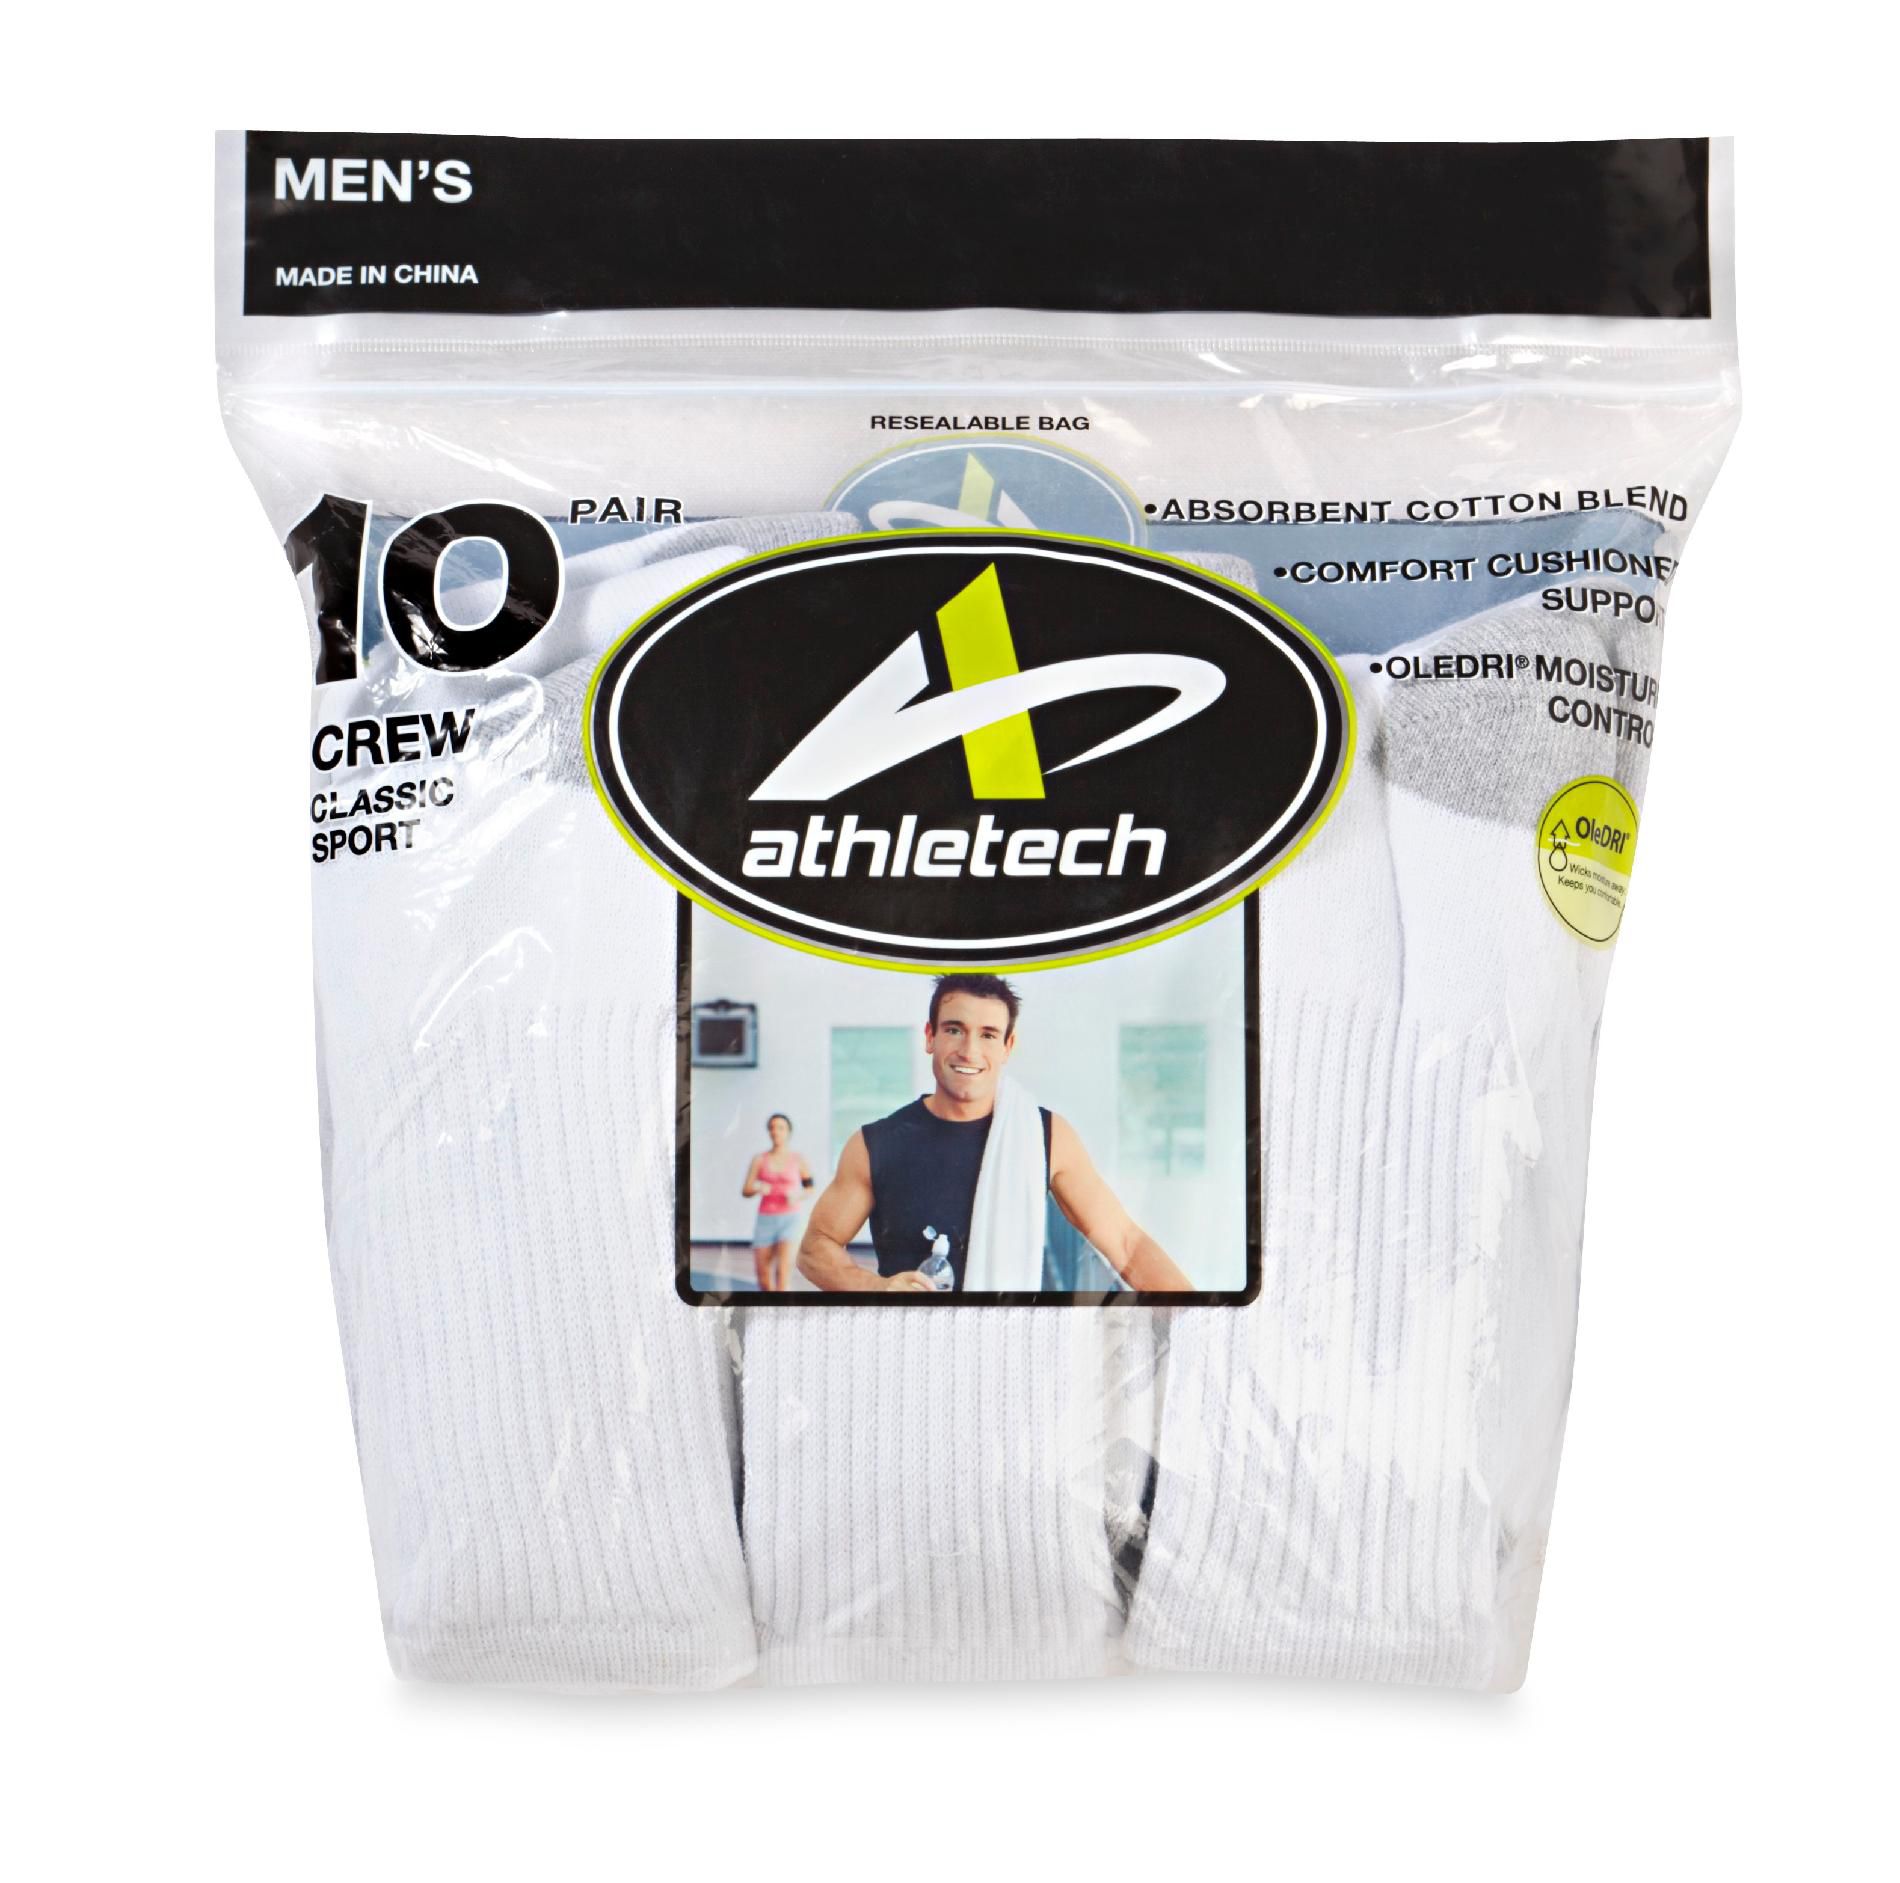 Athletech Men's 10 Pair Classic Sport Crew Socks